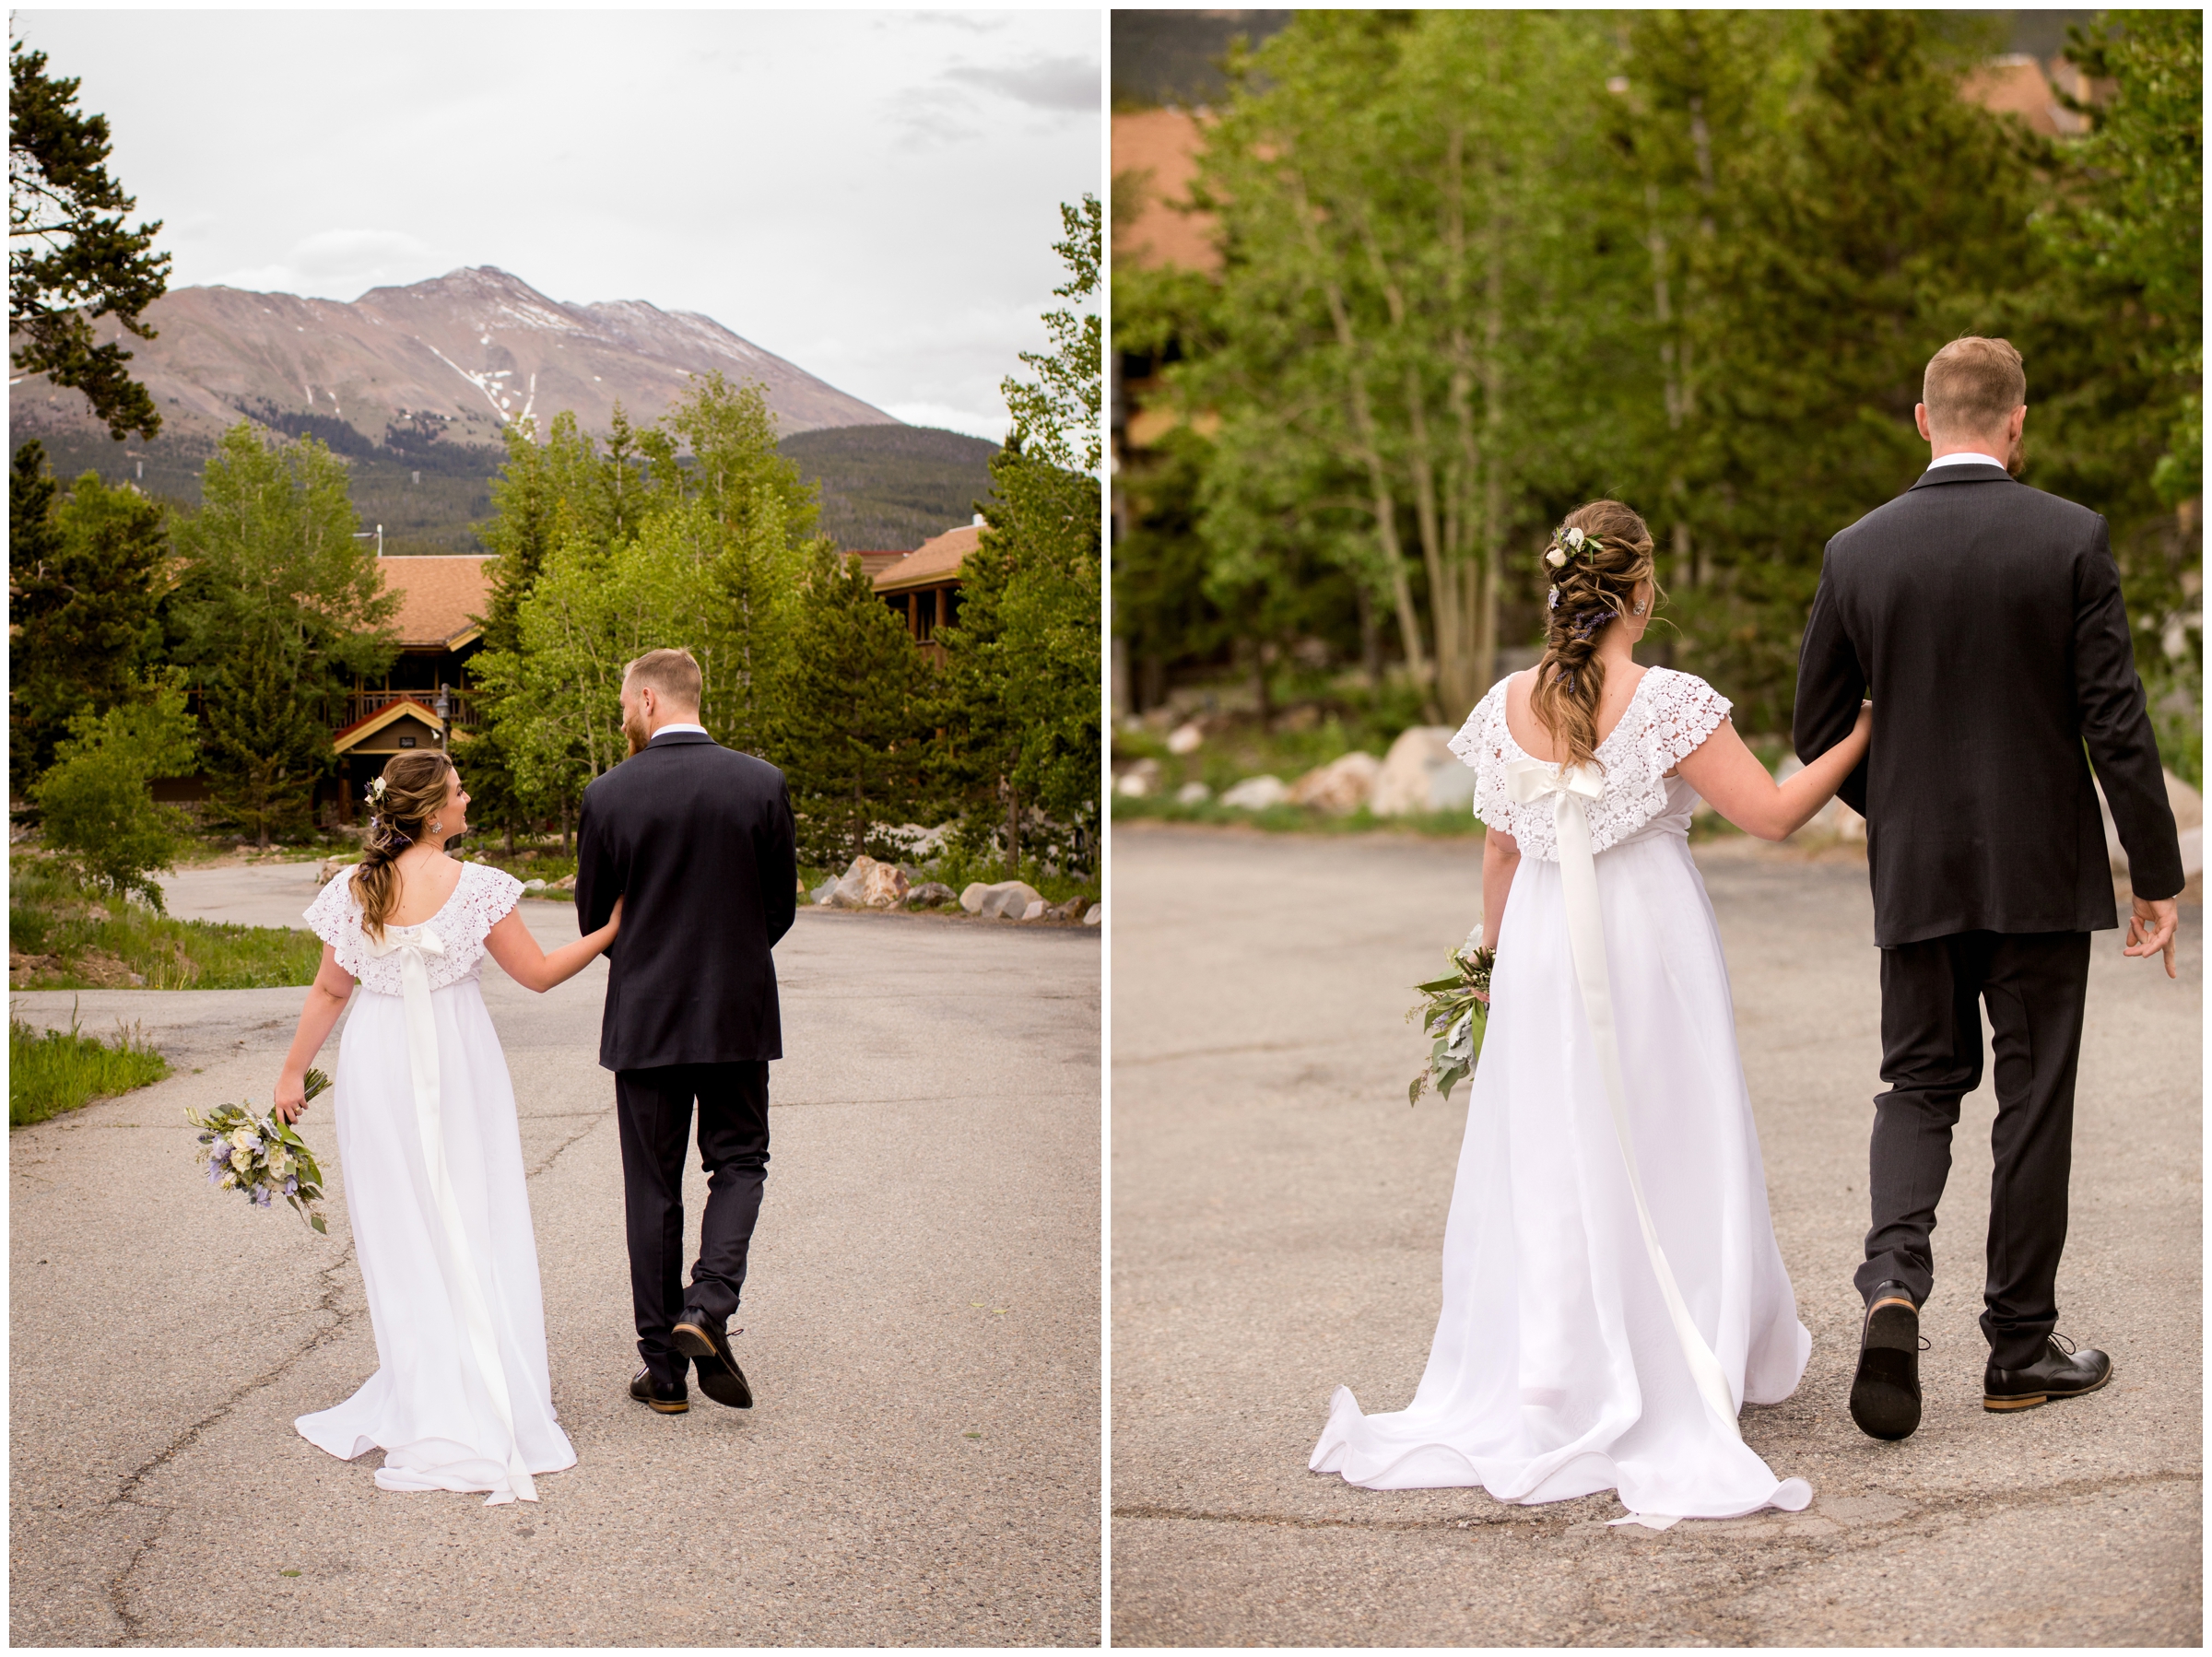 The Lodge at Breckenridge wedding photos by Breckenridge Colorado photographer Plum Pretty Photography